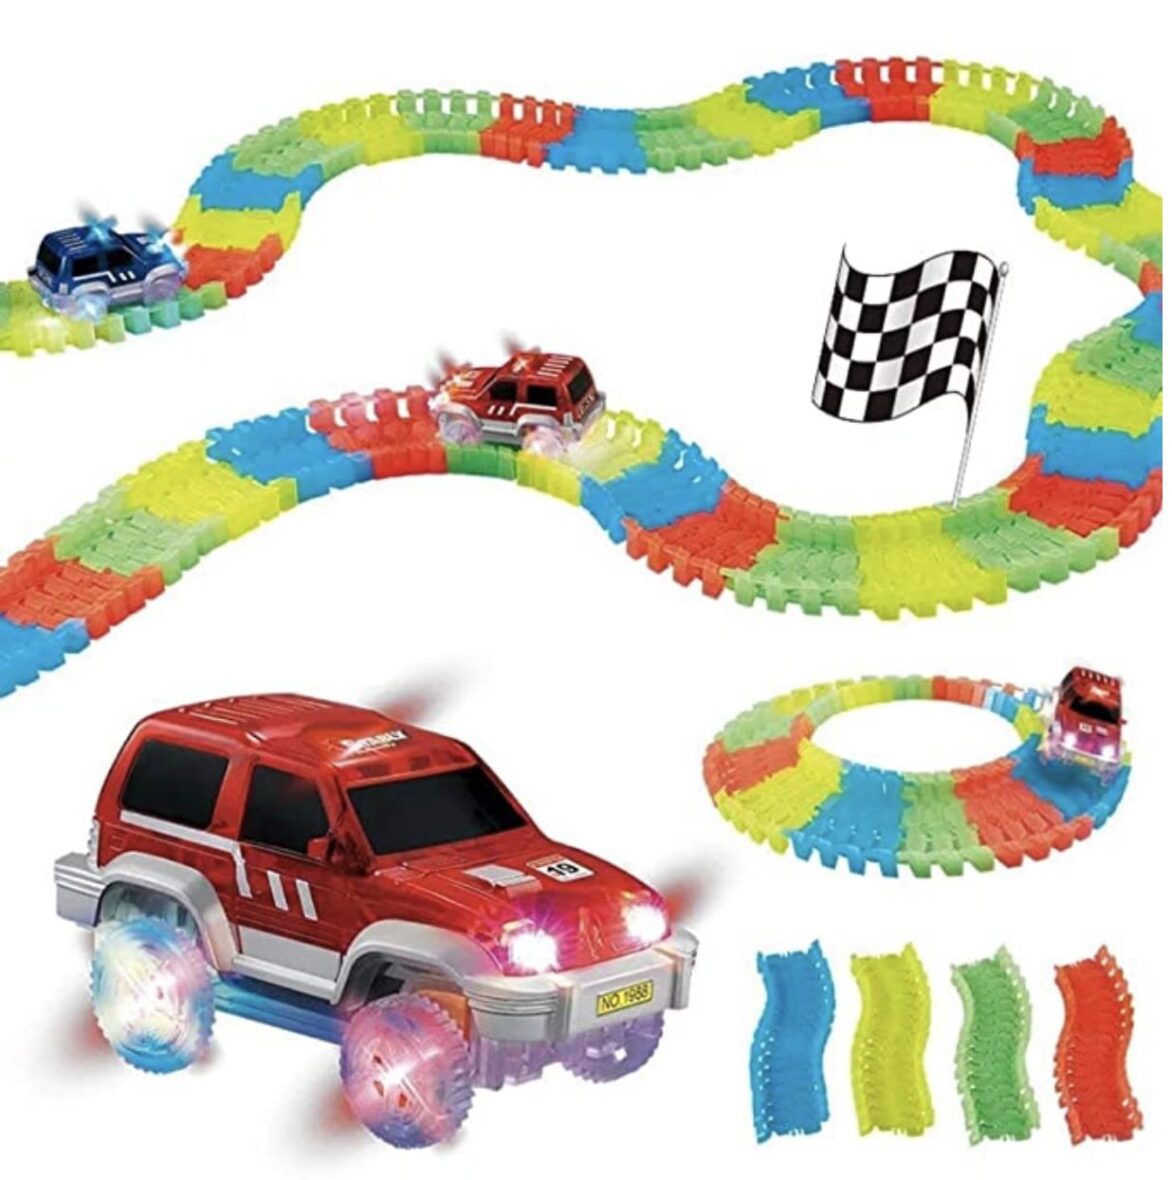 KIPA 1 Magic Race car with 220 Bend Flex and Glow Tracks,Plastic Magic 11 Feet Long Flexible Tracks Car Play Set for Kids (Multi Color)